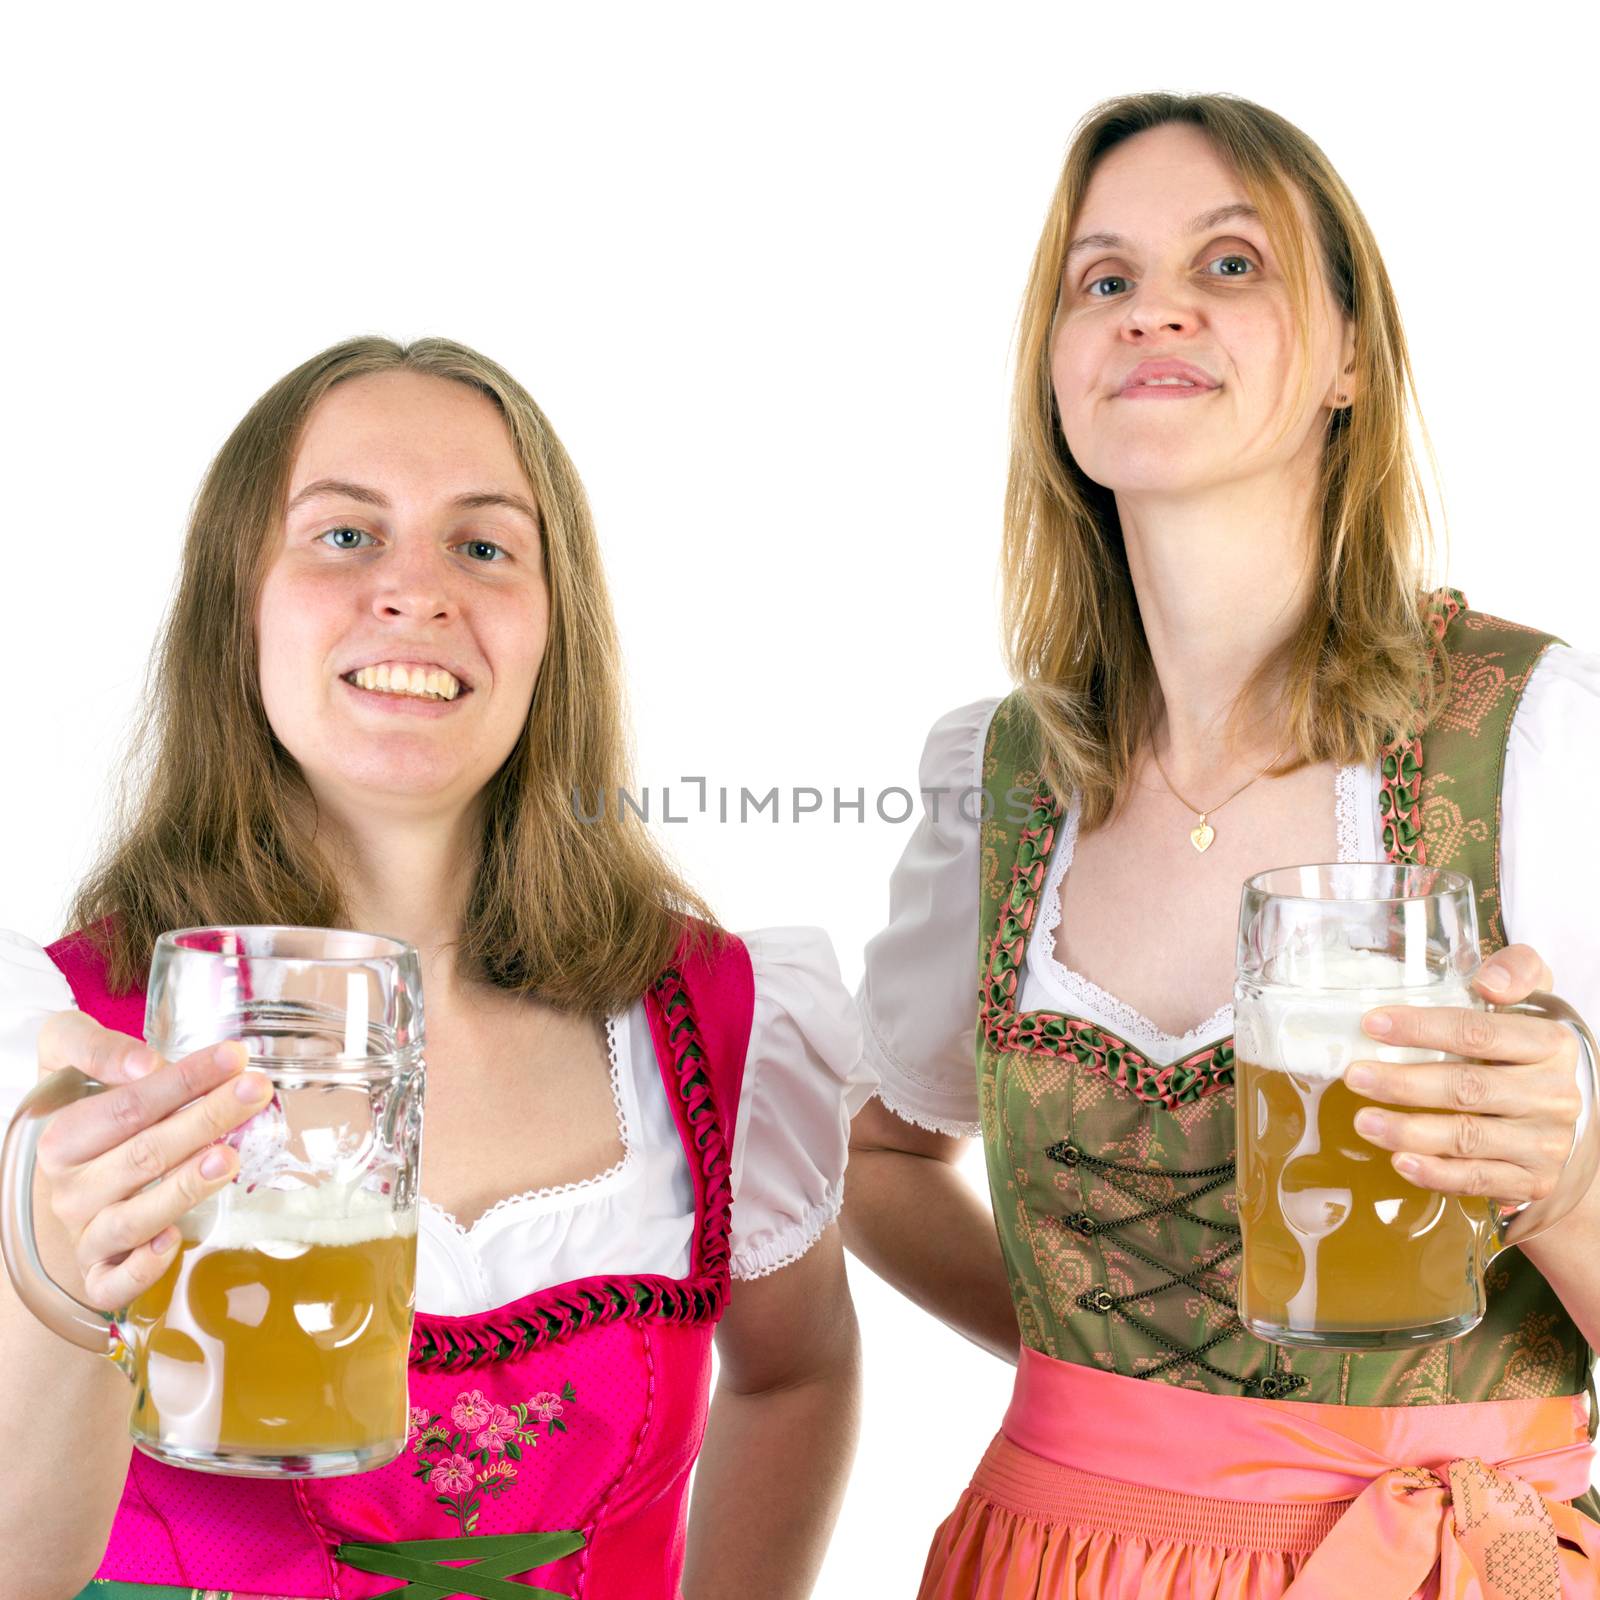 Drinking double beer on Oktoberfest